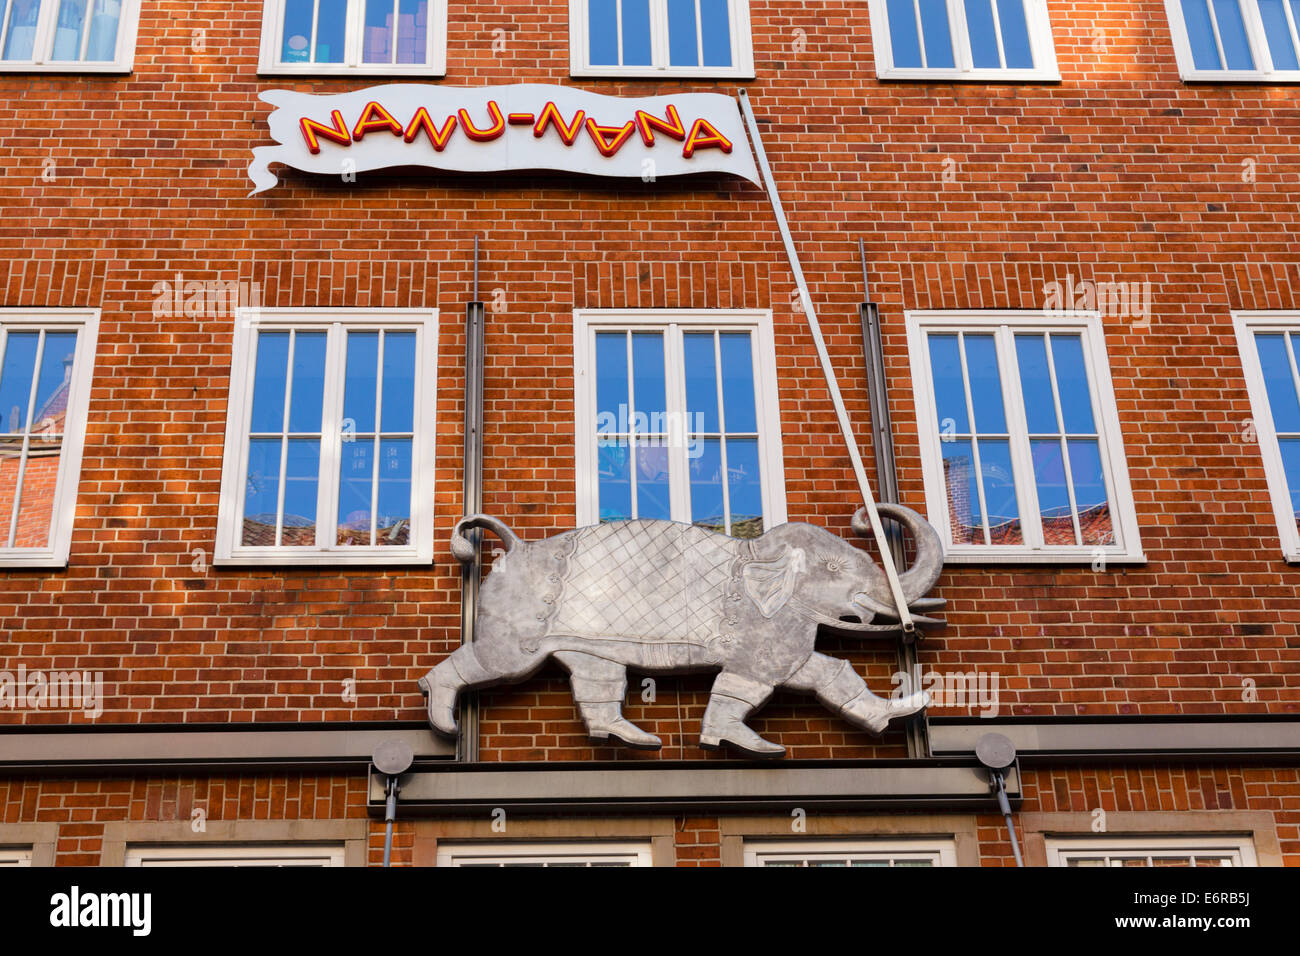 Elephant with flag detail from "Nanu-Nana" childrens shop, Bremen, Germany. Stock Photo